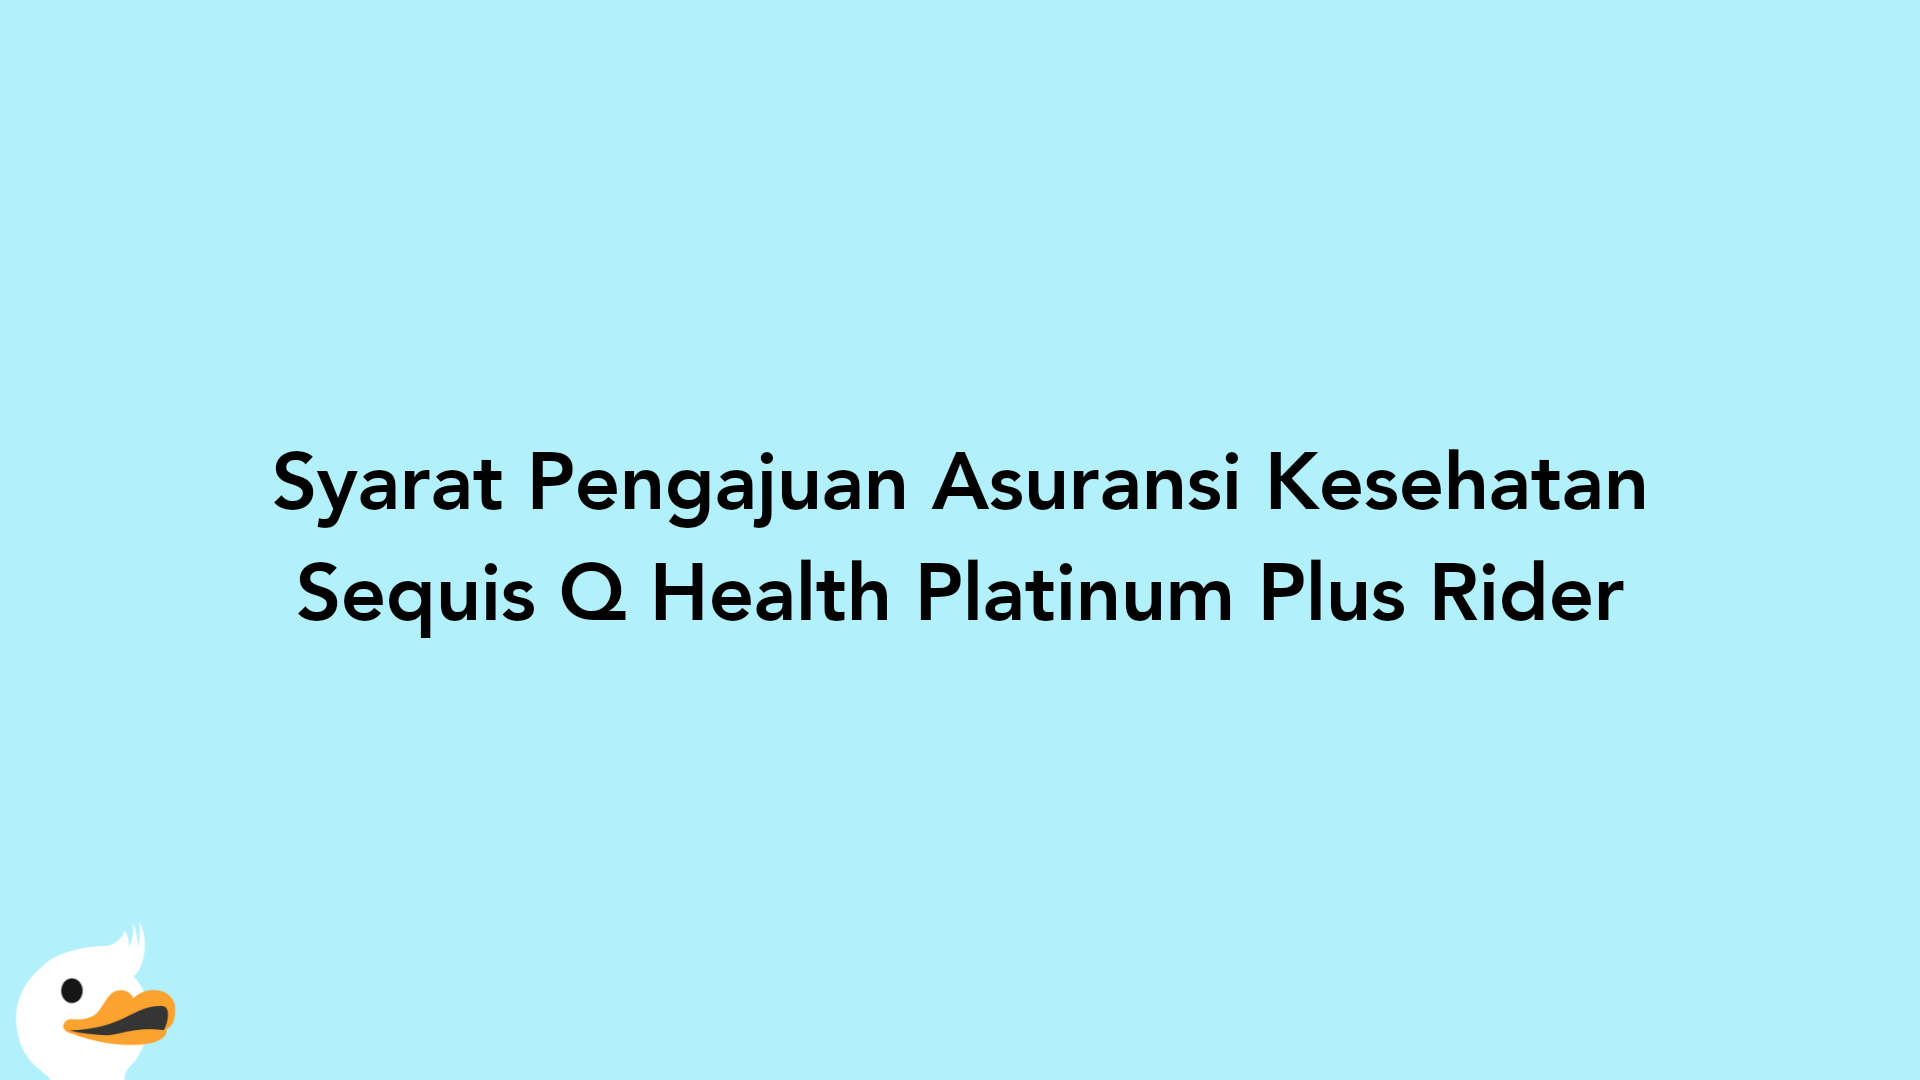 Syarat Pengajuan Asuransi Kesehatan Sequis Q Health Platinum Plus Rider